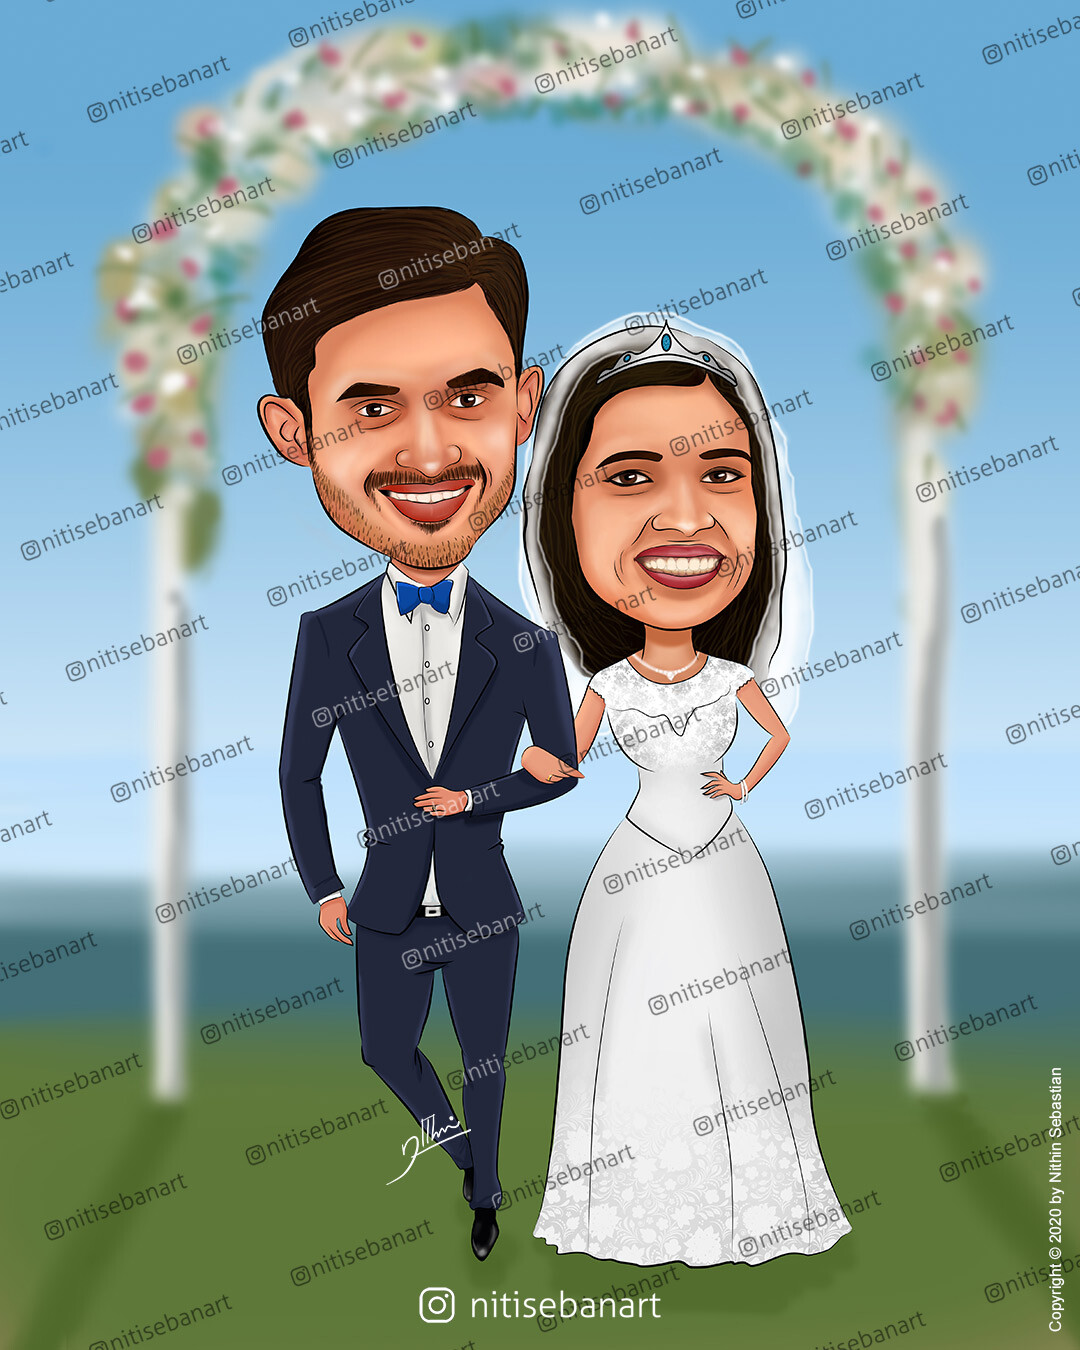 nithin sebastian - Kerala Christian wedding caricature